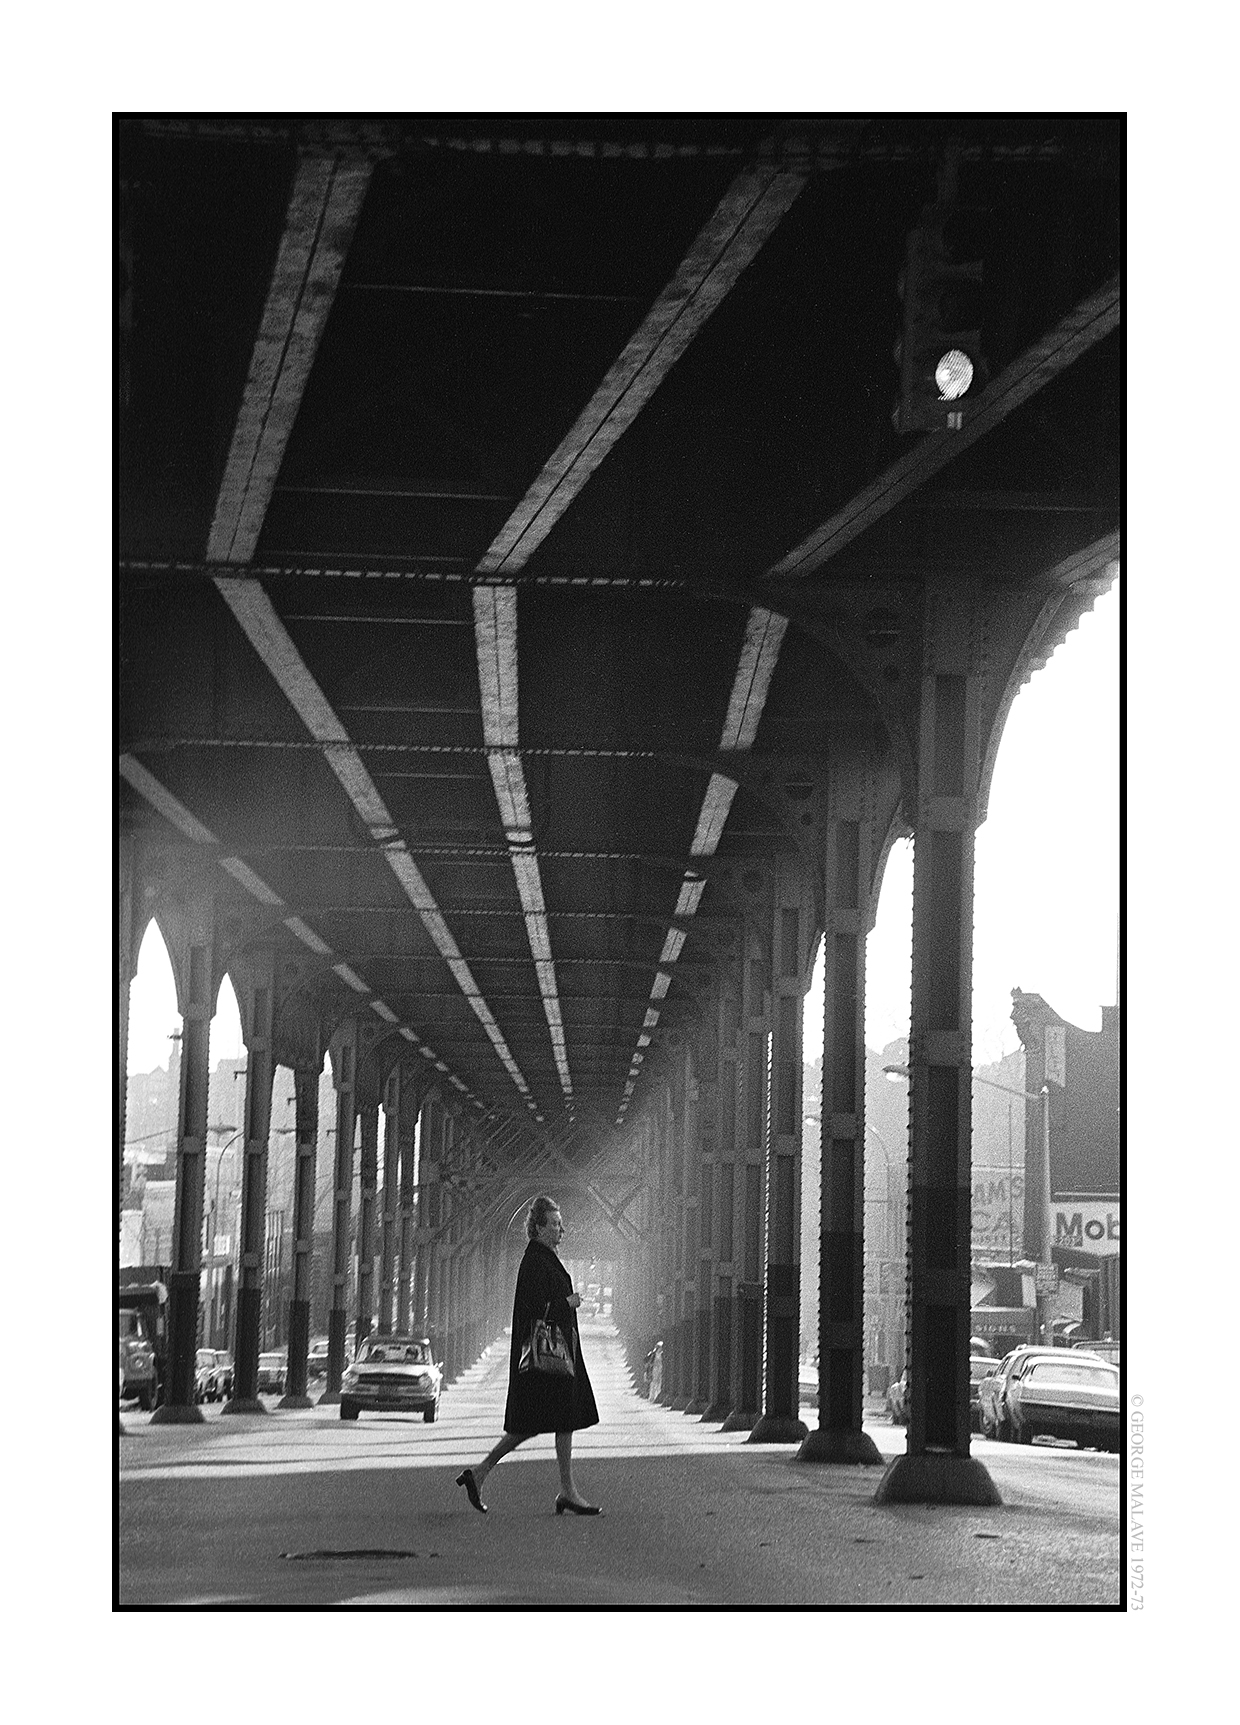 George Malave, Light Shaft under El, Third Ave El - Bronx series, 1972-73.